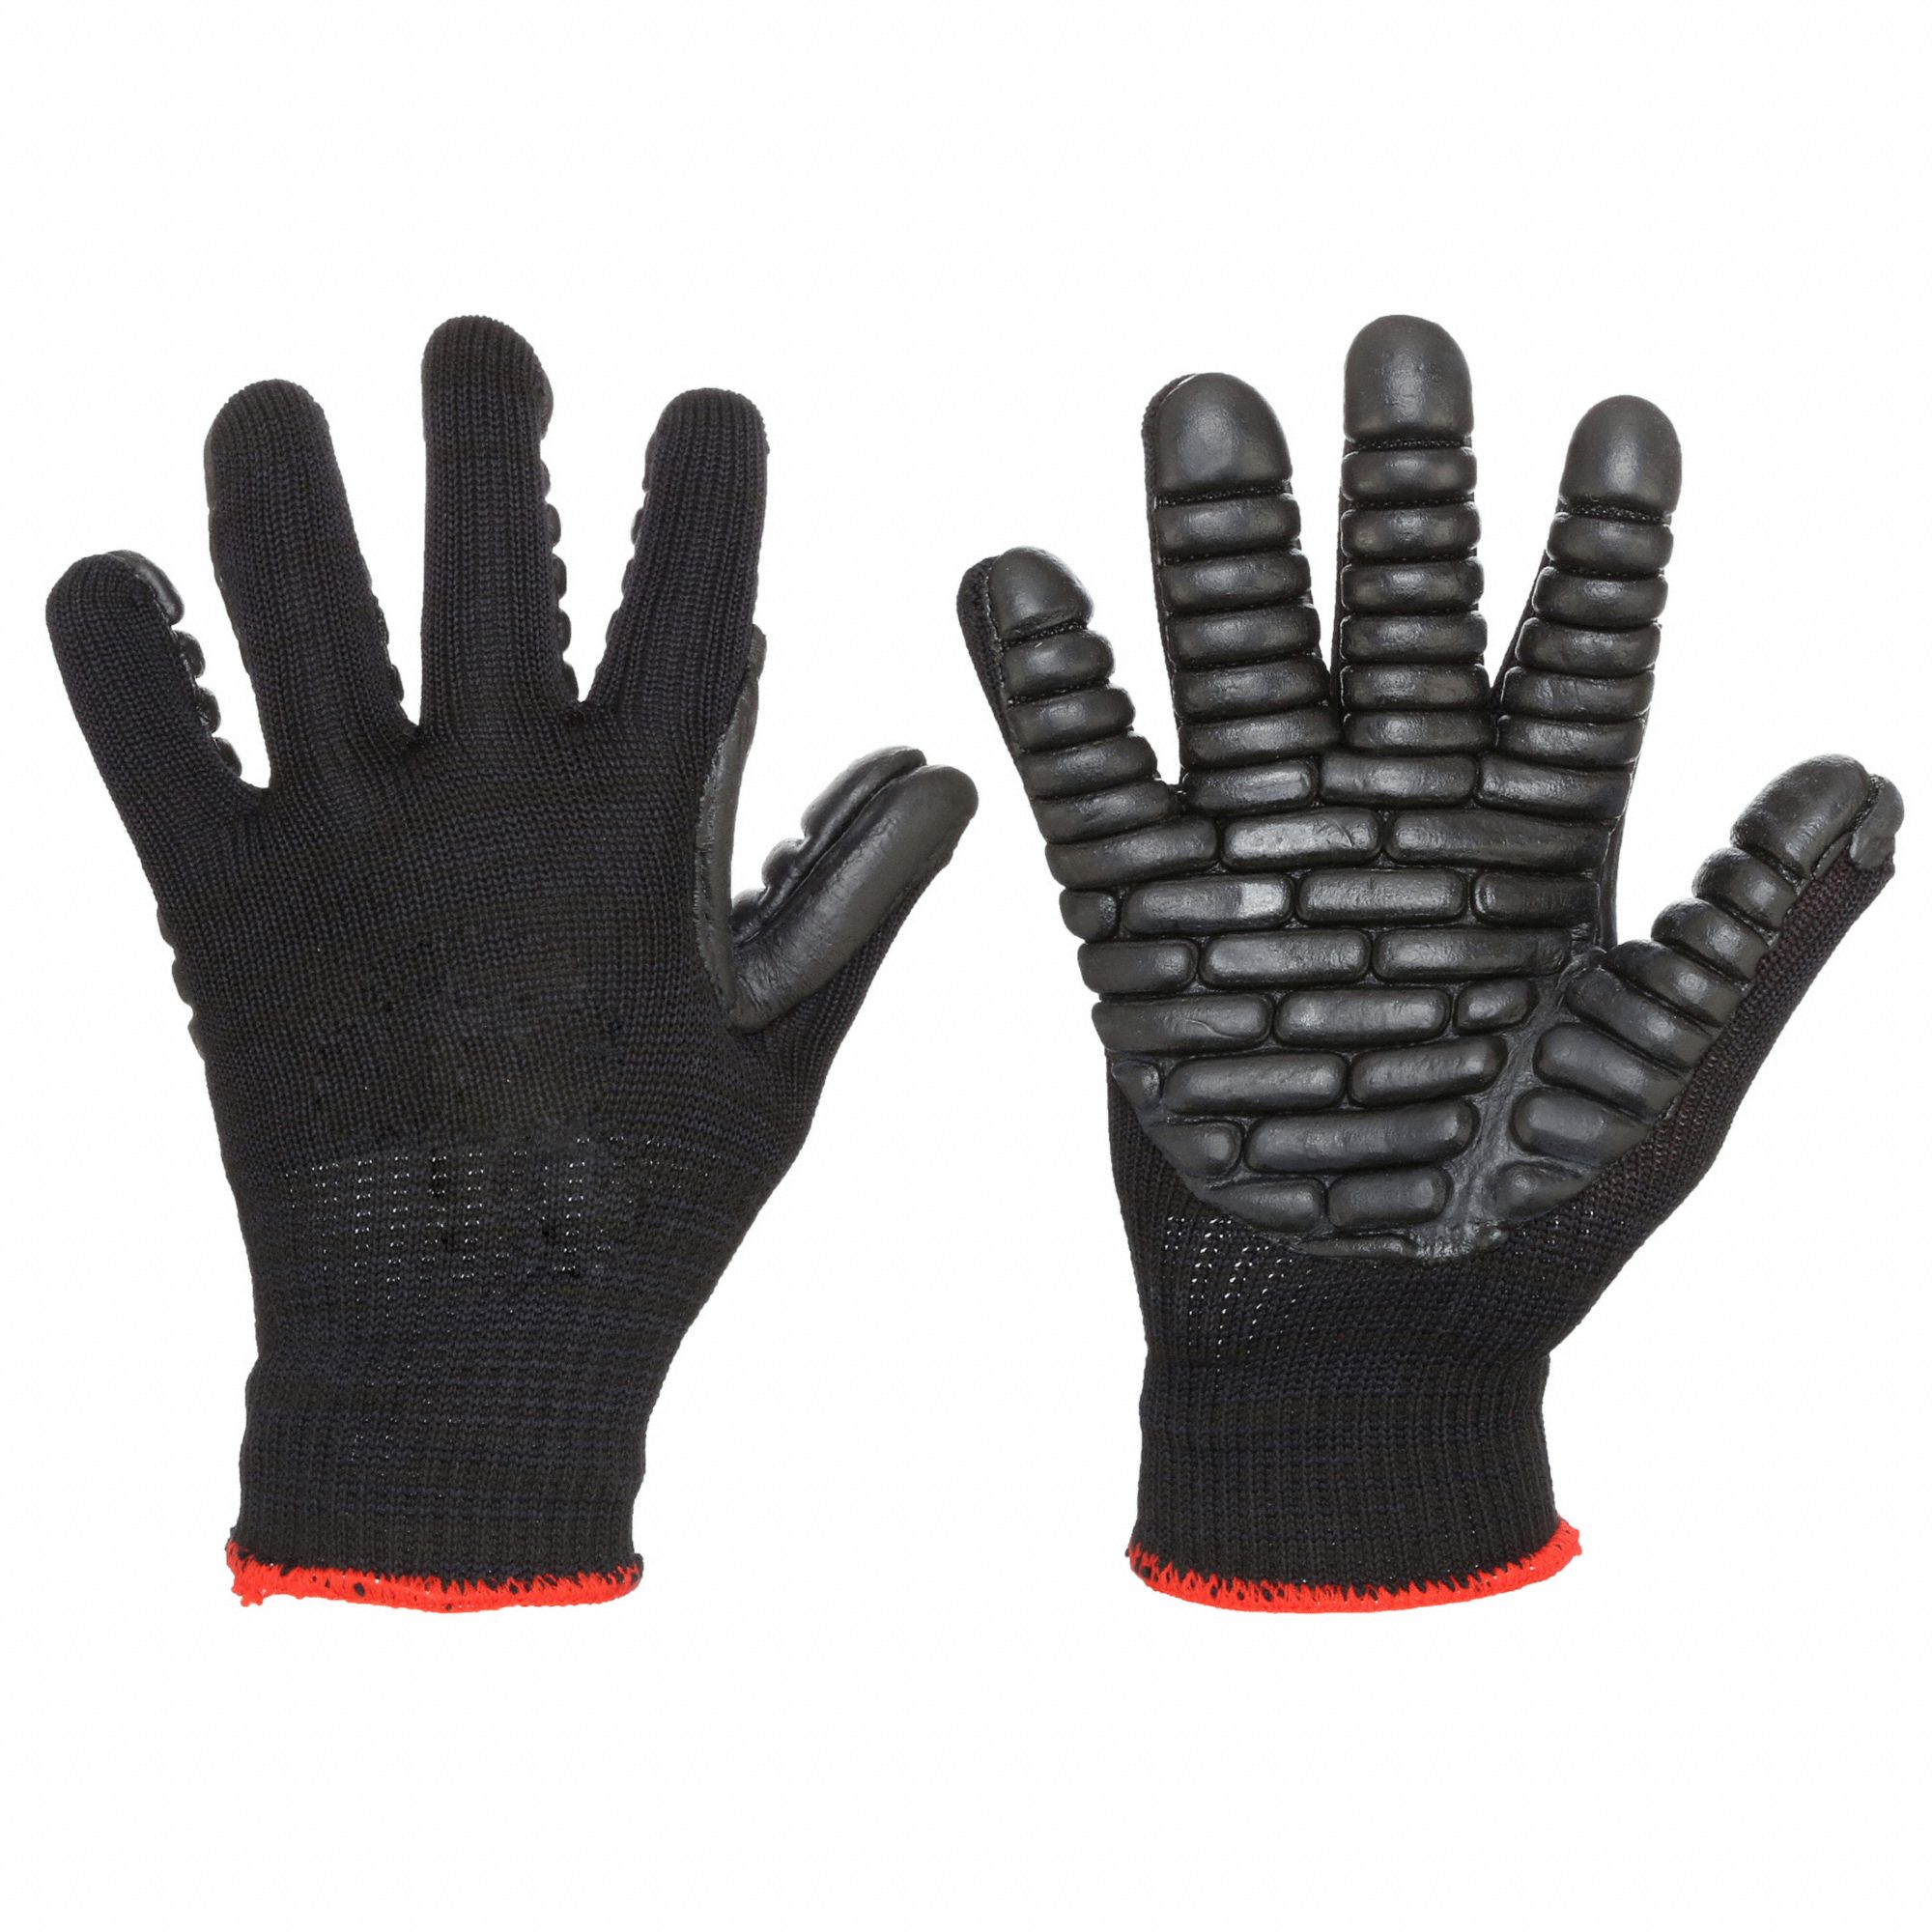 Finger Protection - Grainger Industrial Supply